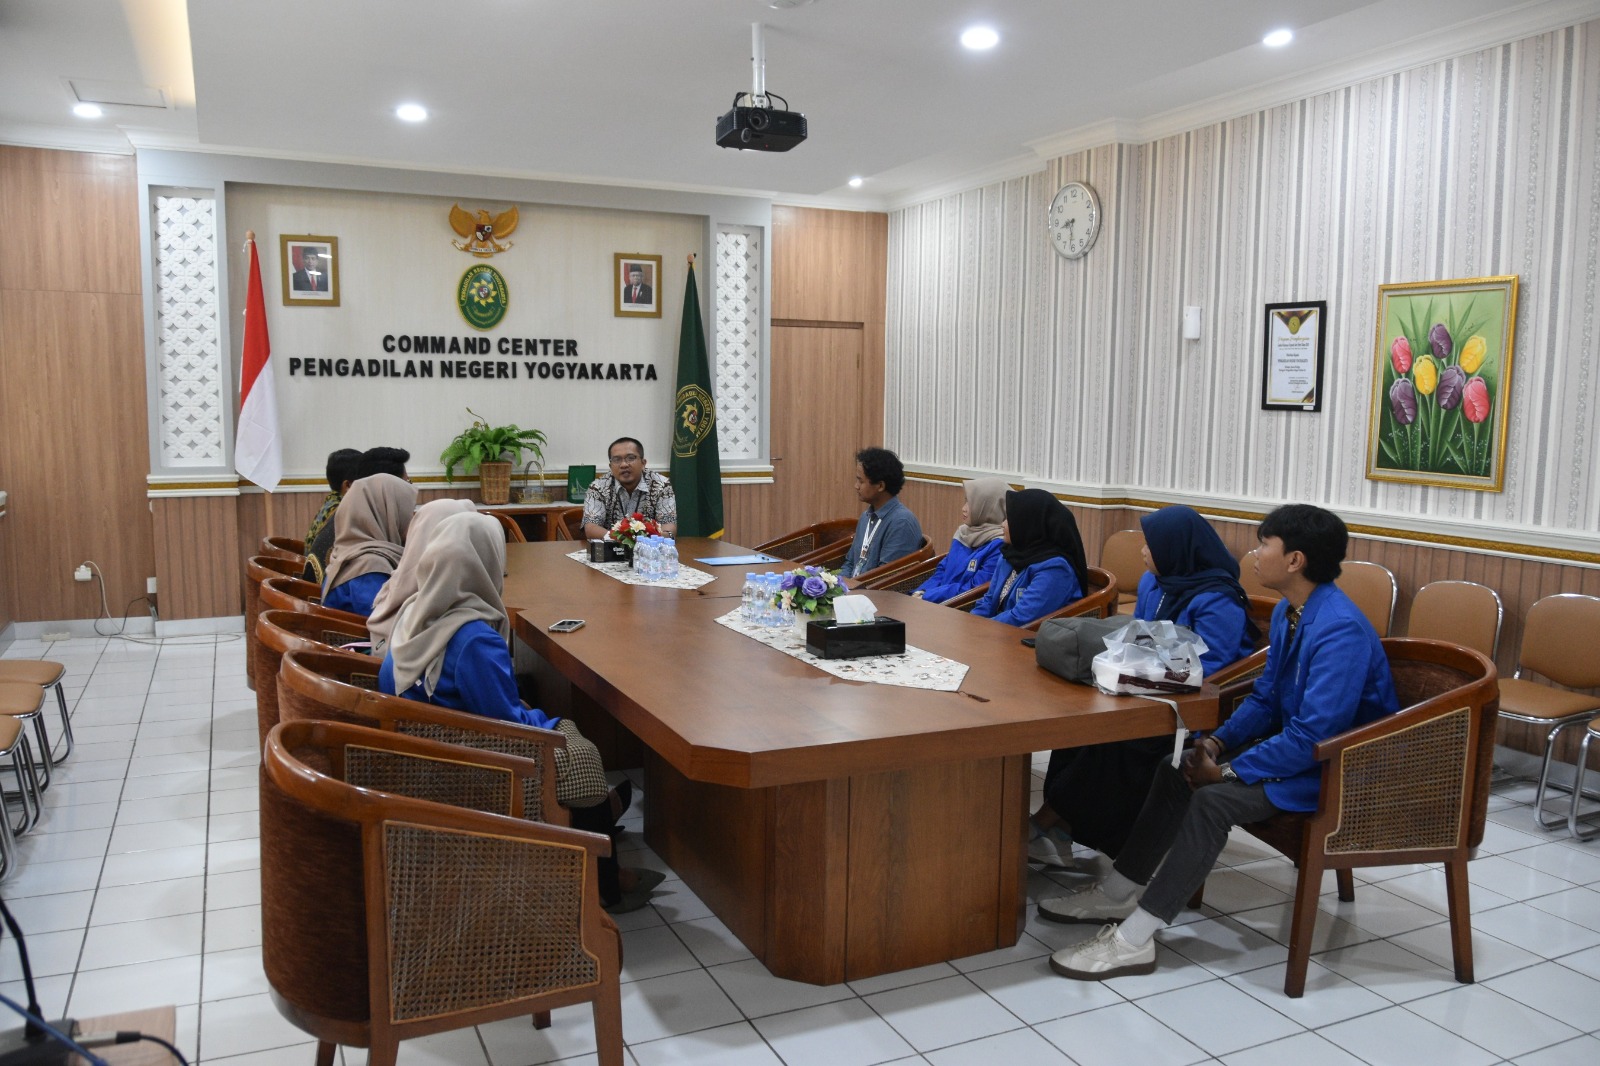 Pelepasan/Penarikan Mahasiswa Magang Fakultas Hukum Universitas Islam Indonesia di Pengadilan Negeri Yogyakarta